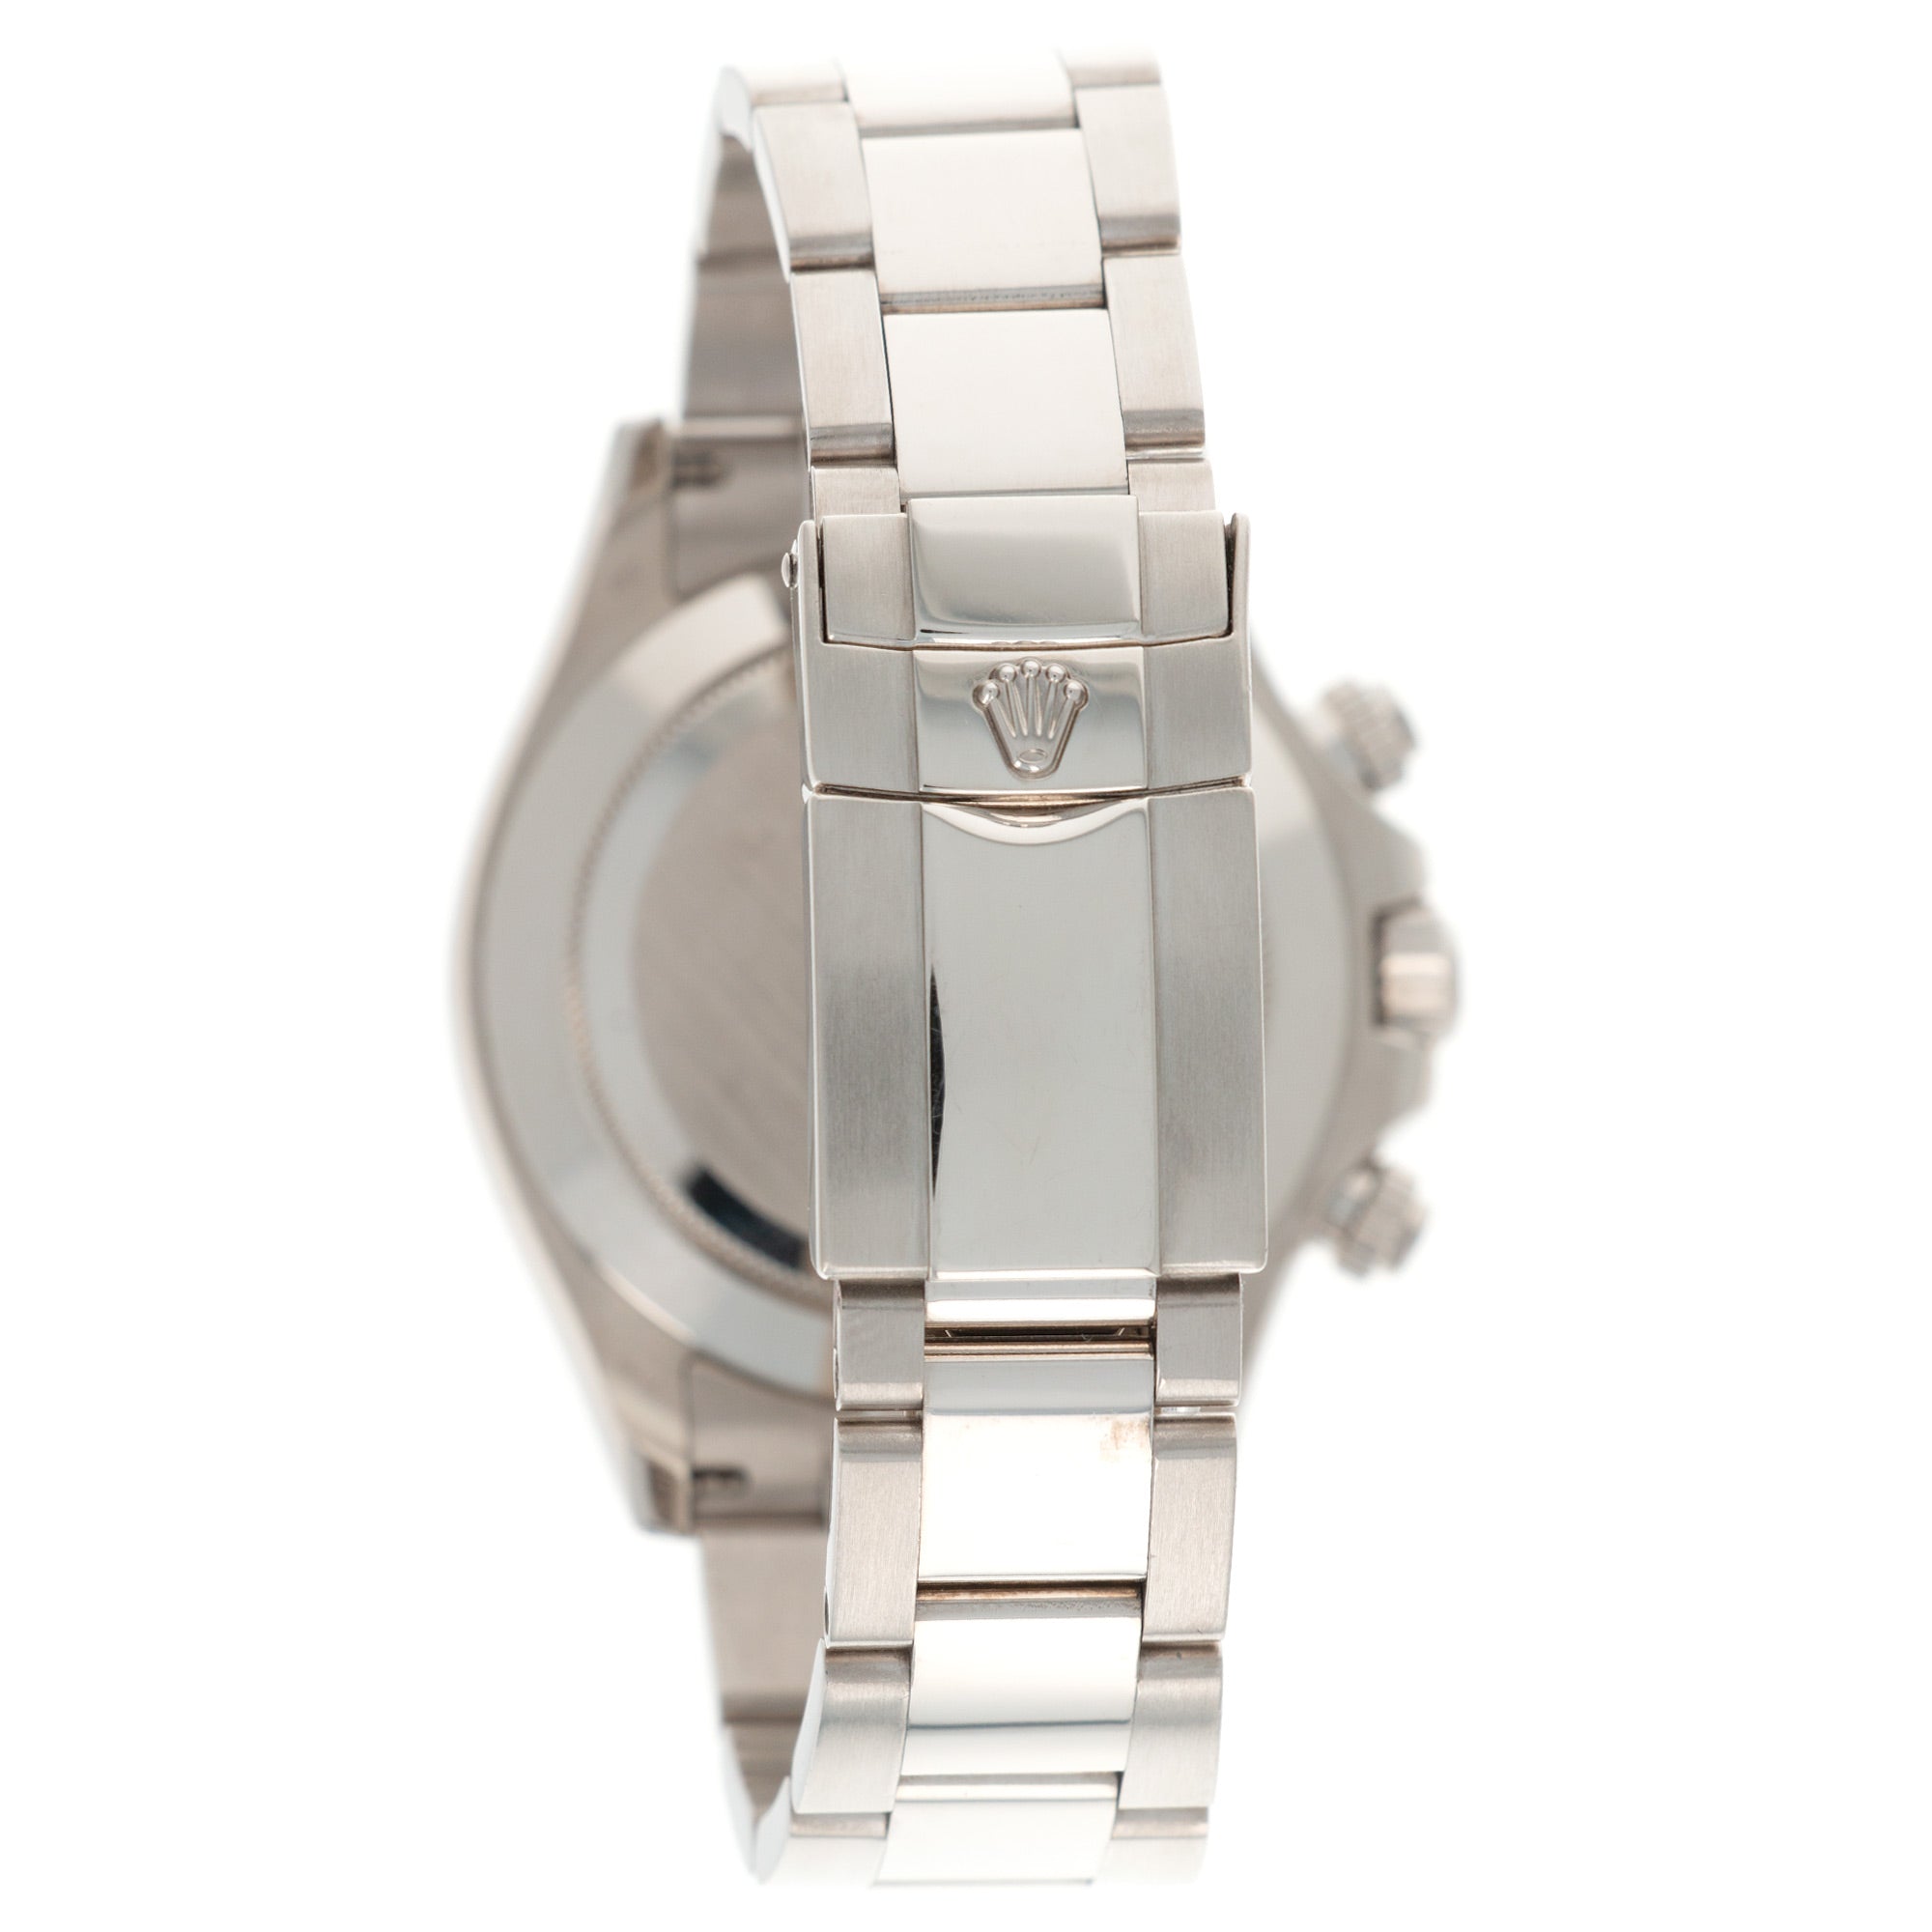 Rolex - Rolex Daytona white Gold with diamond dial ref. 116509 - The Keystone Watches